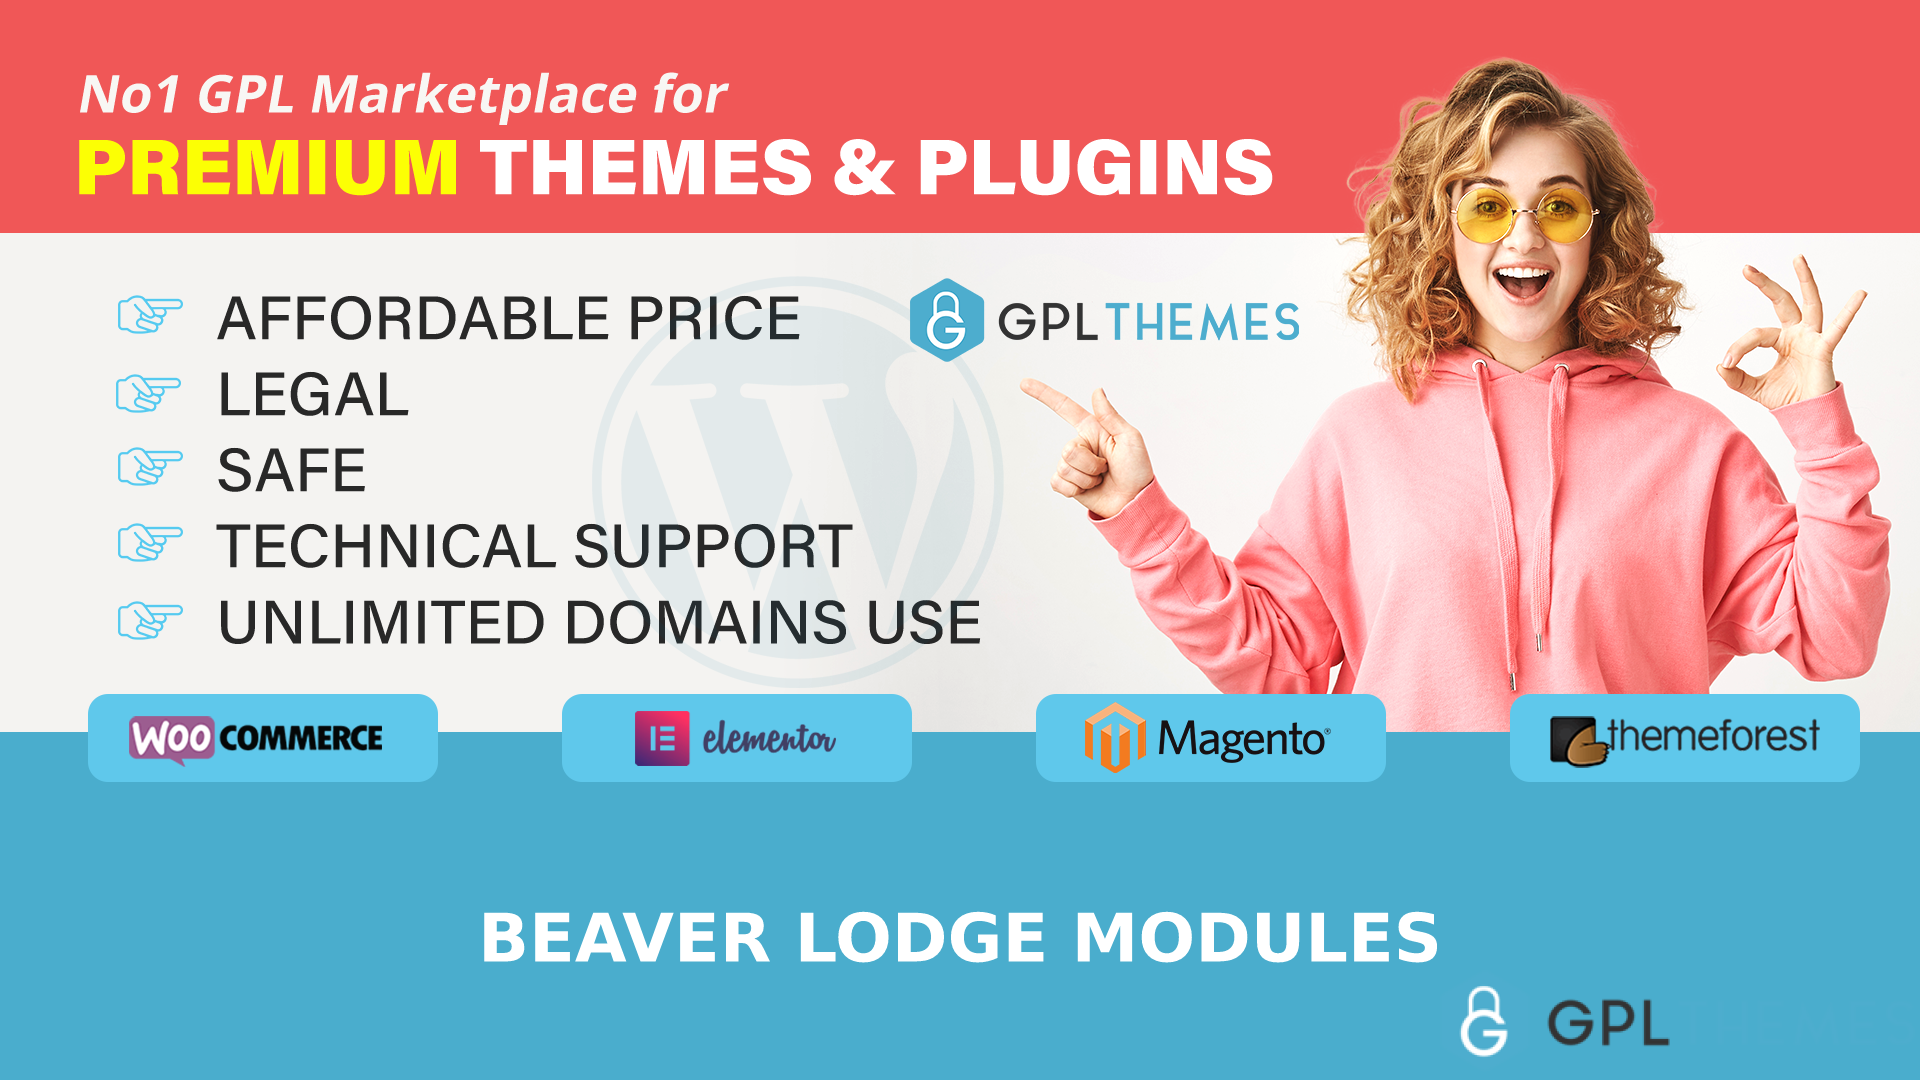 Beaver Lodge Modules